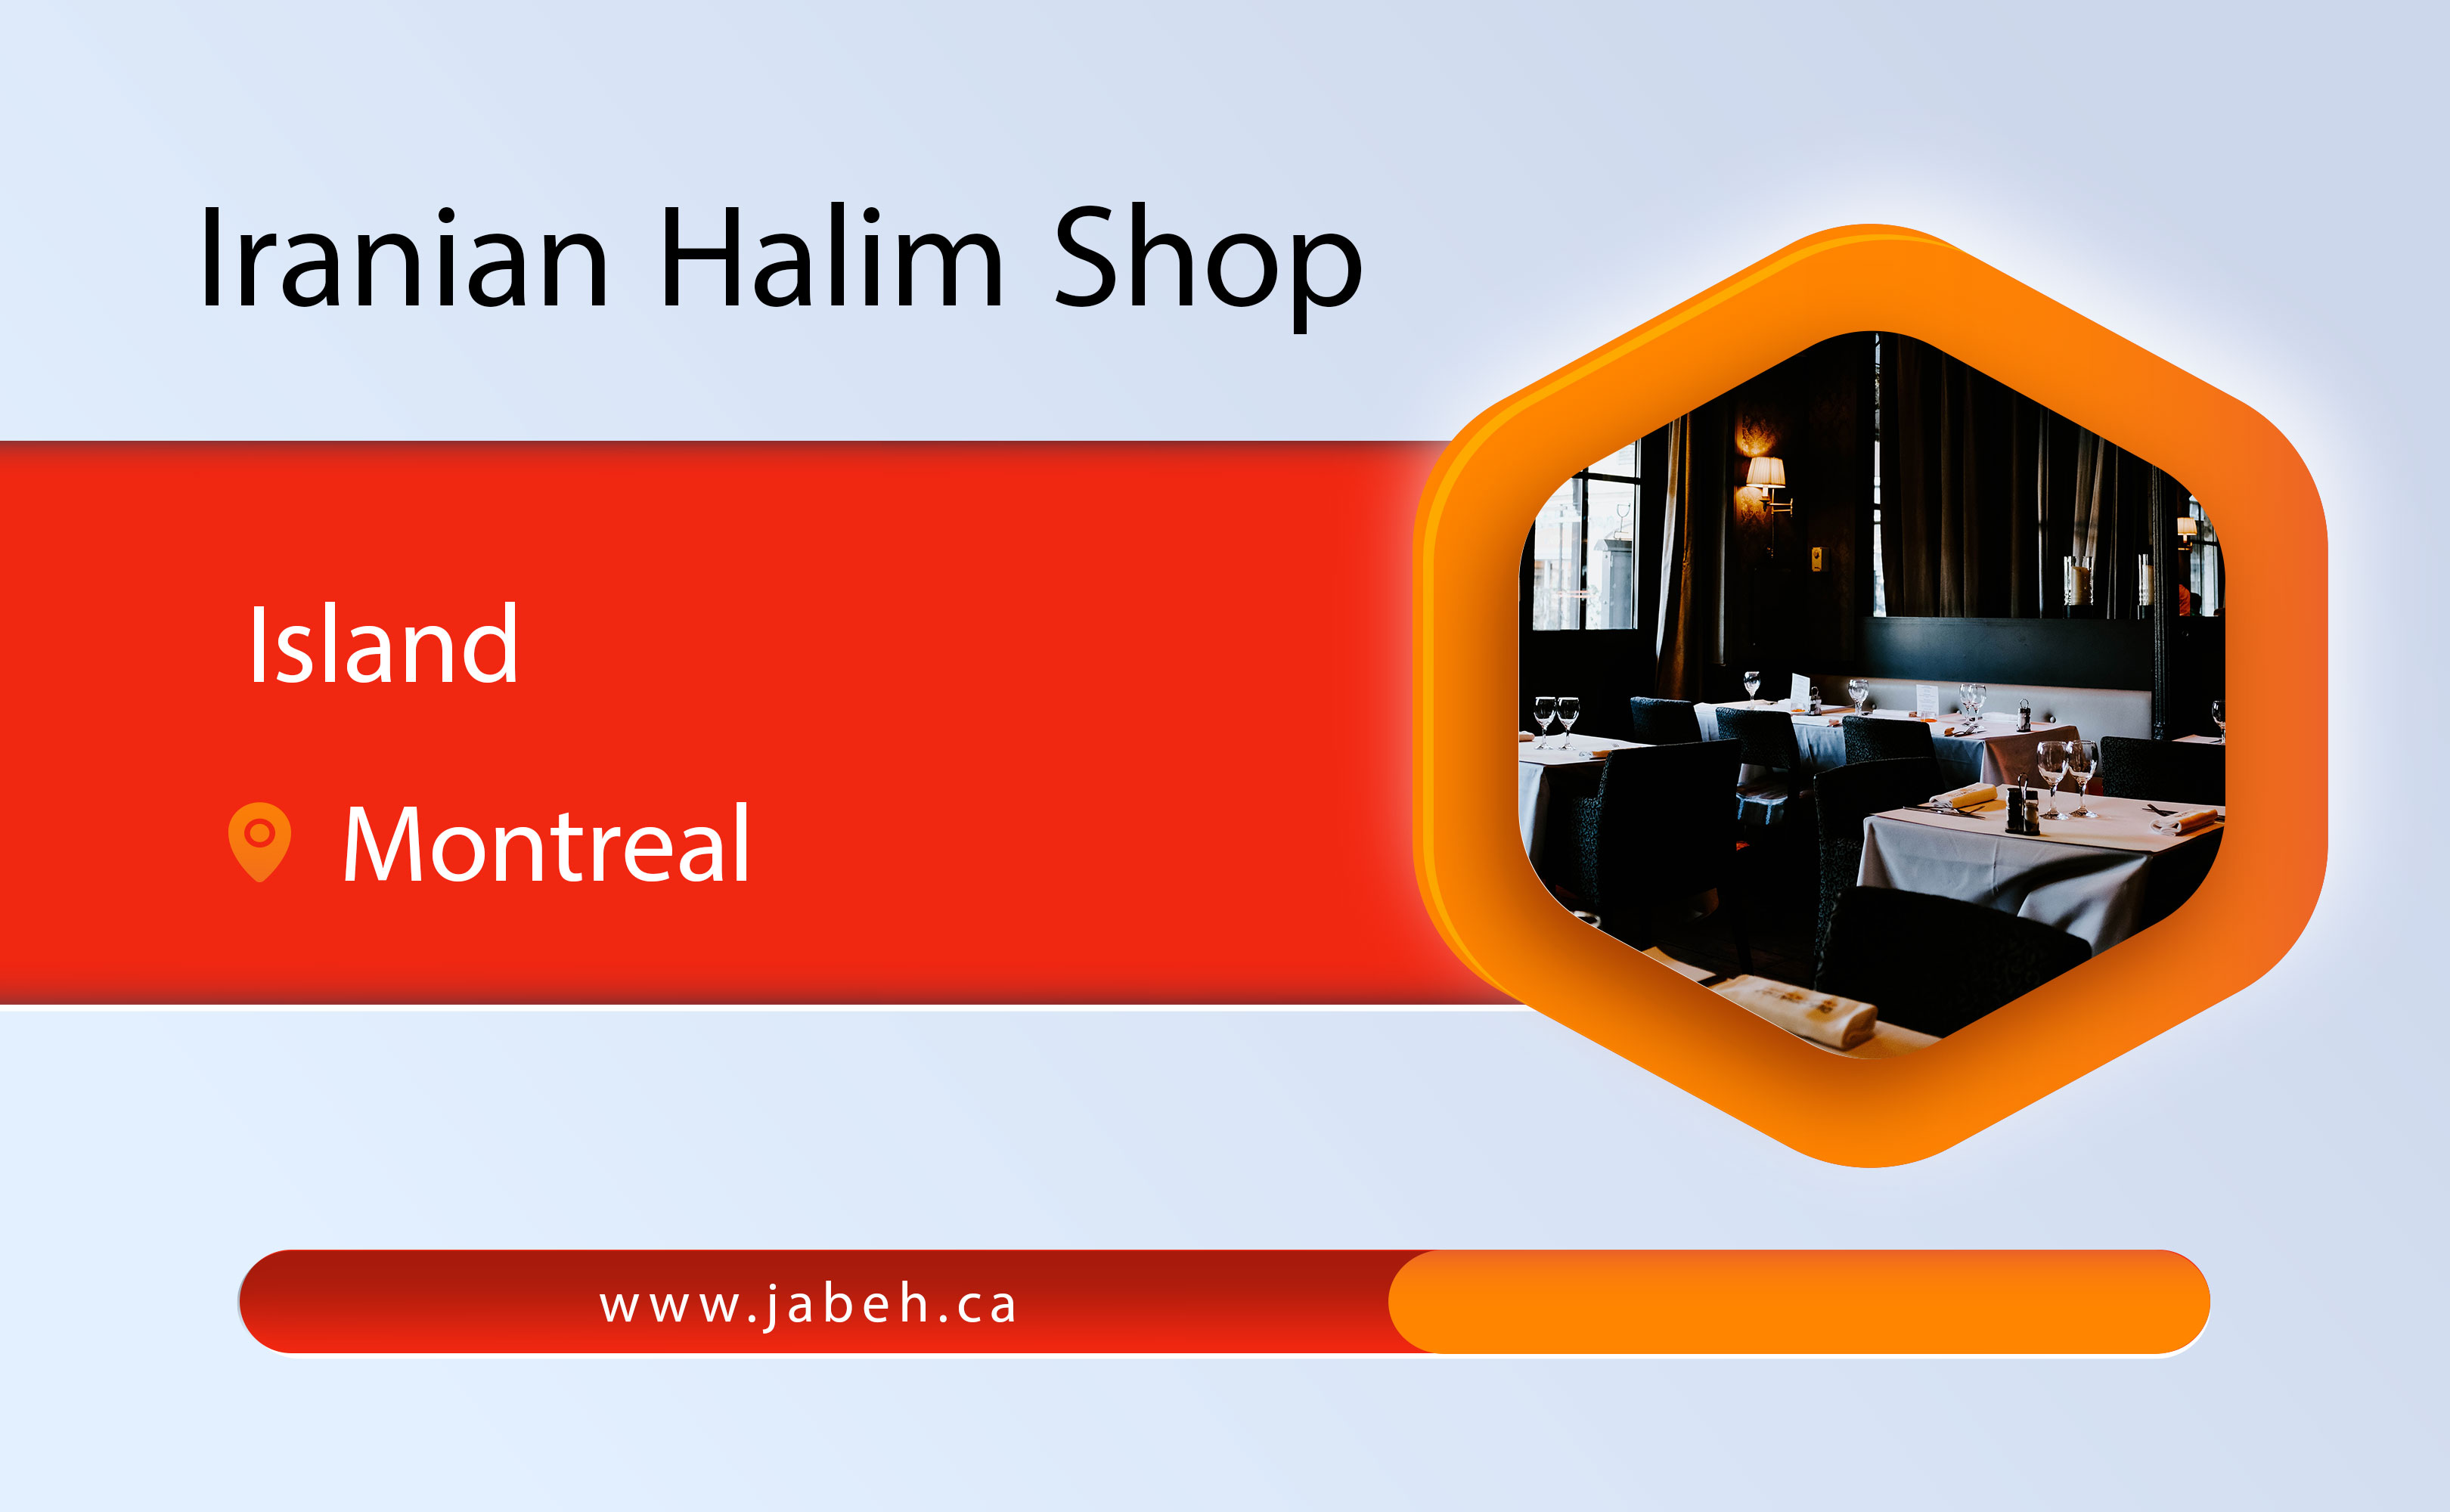 Iranian halim shop in Montreal